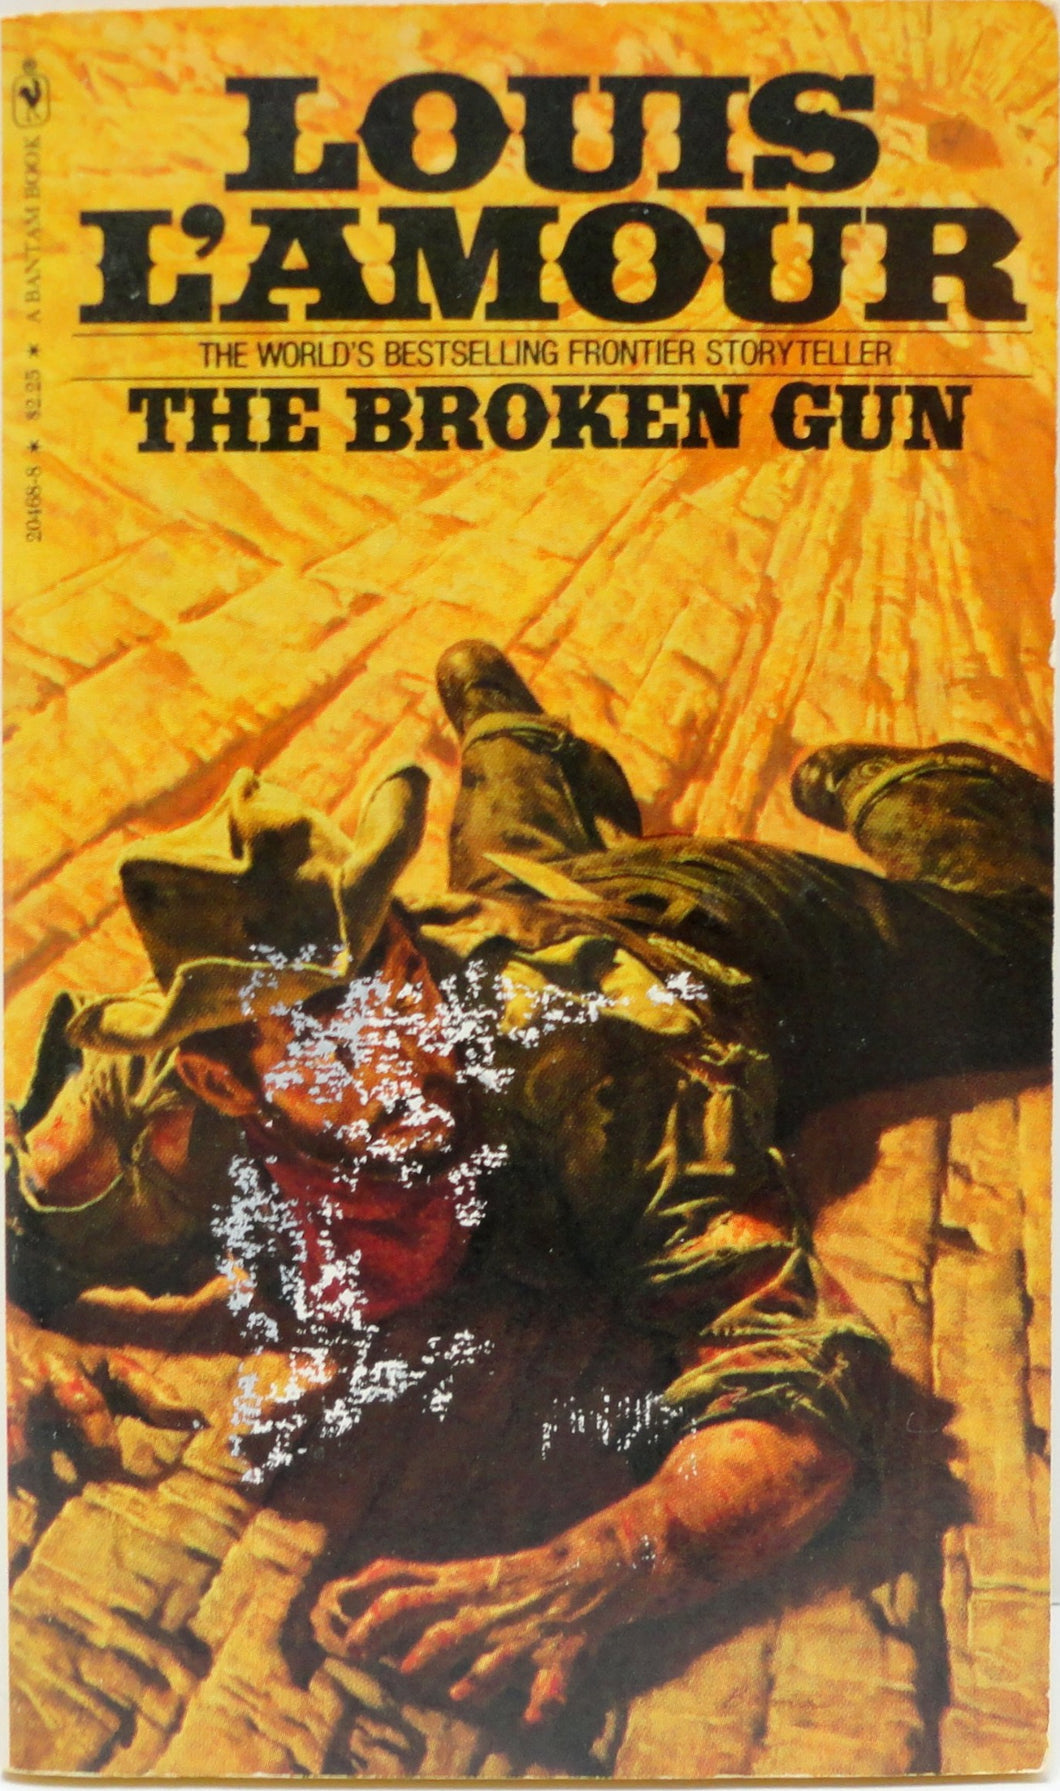 The Broken Gun